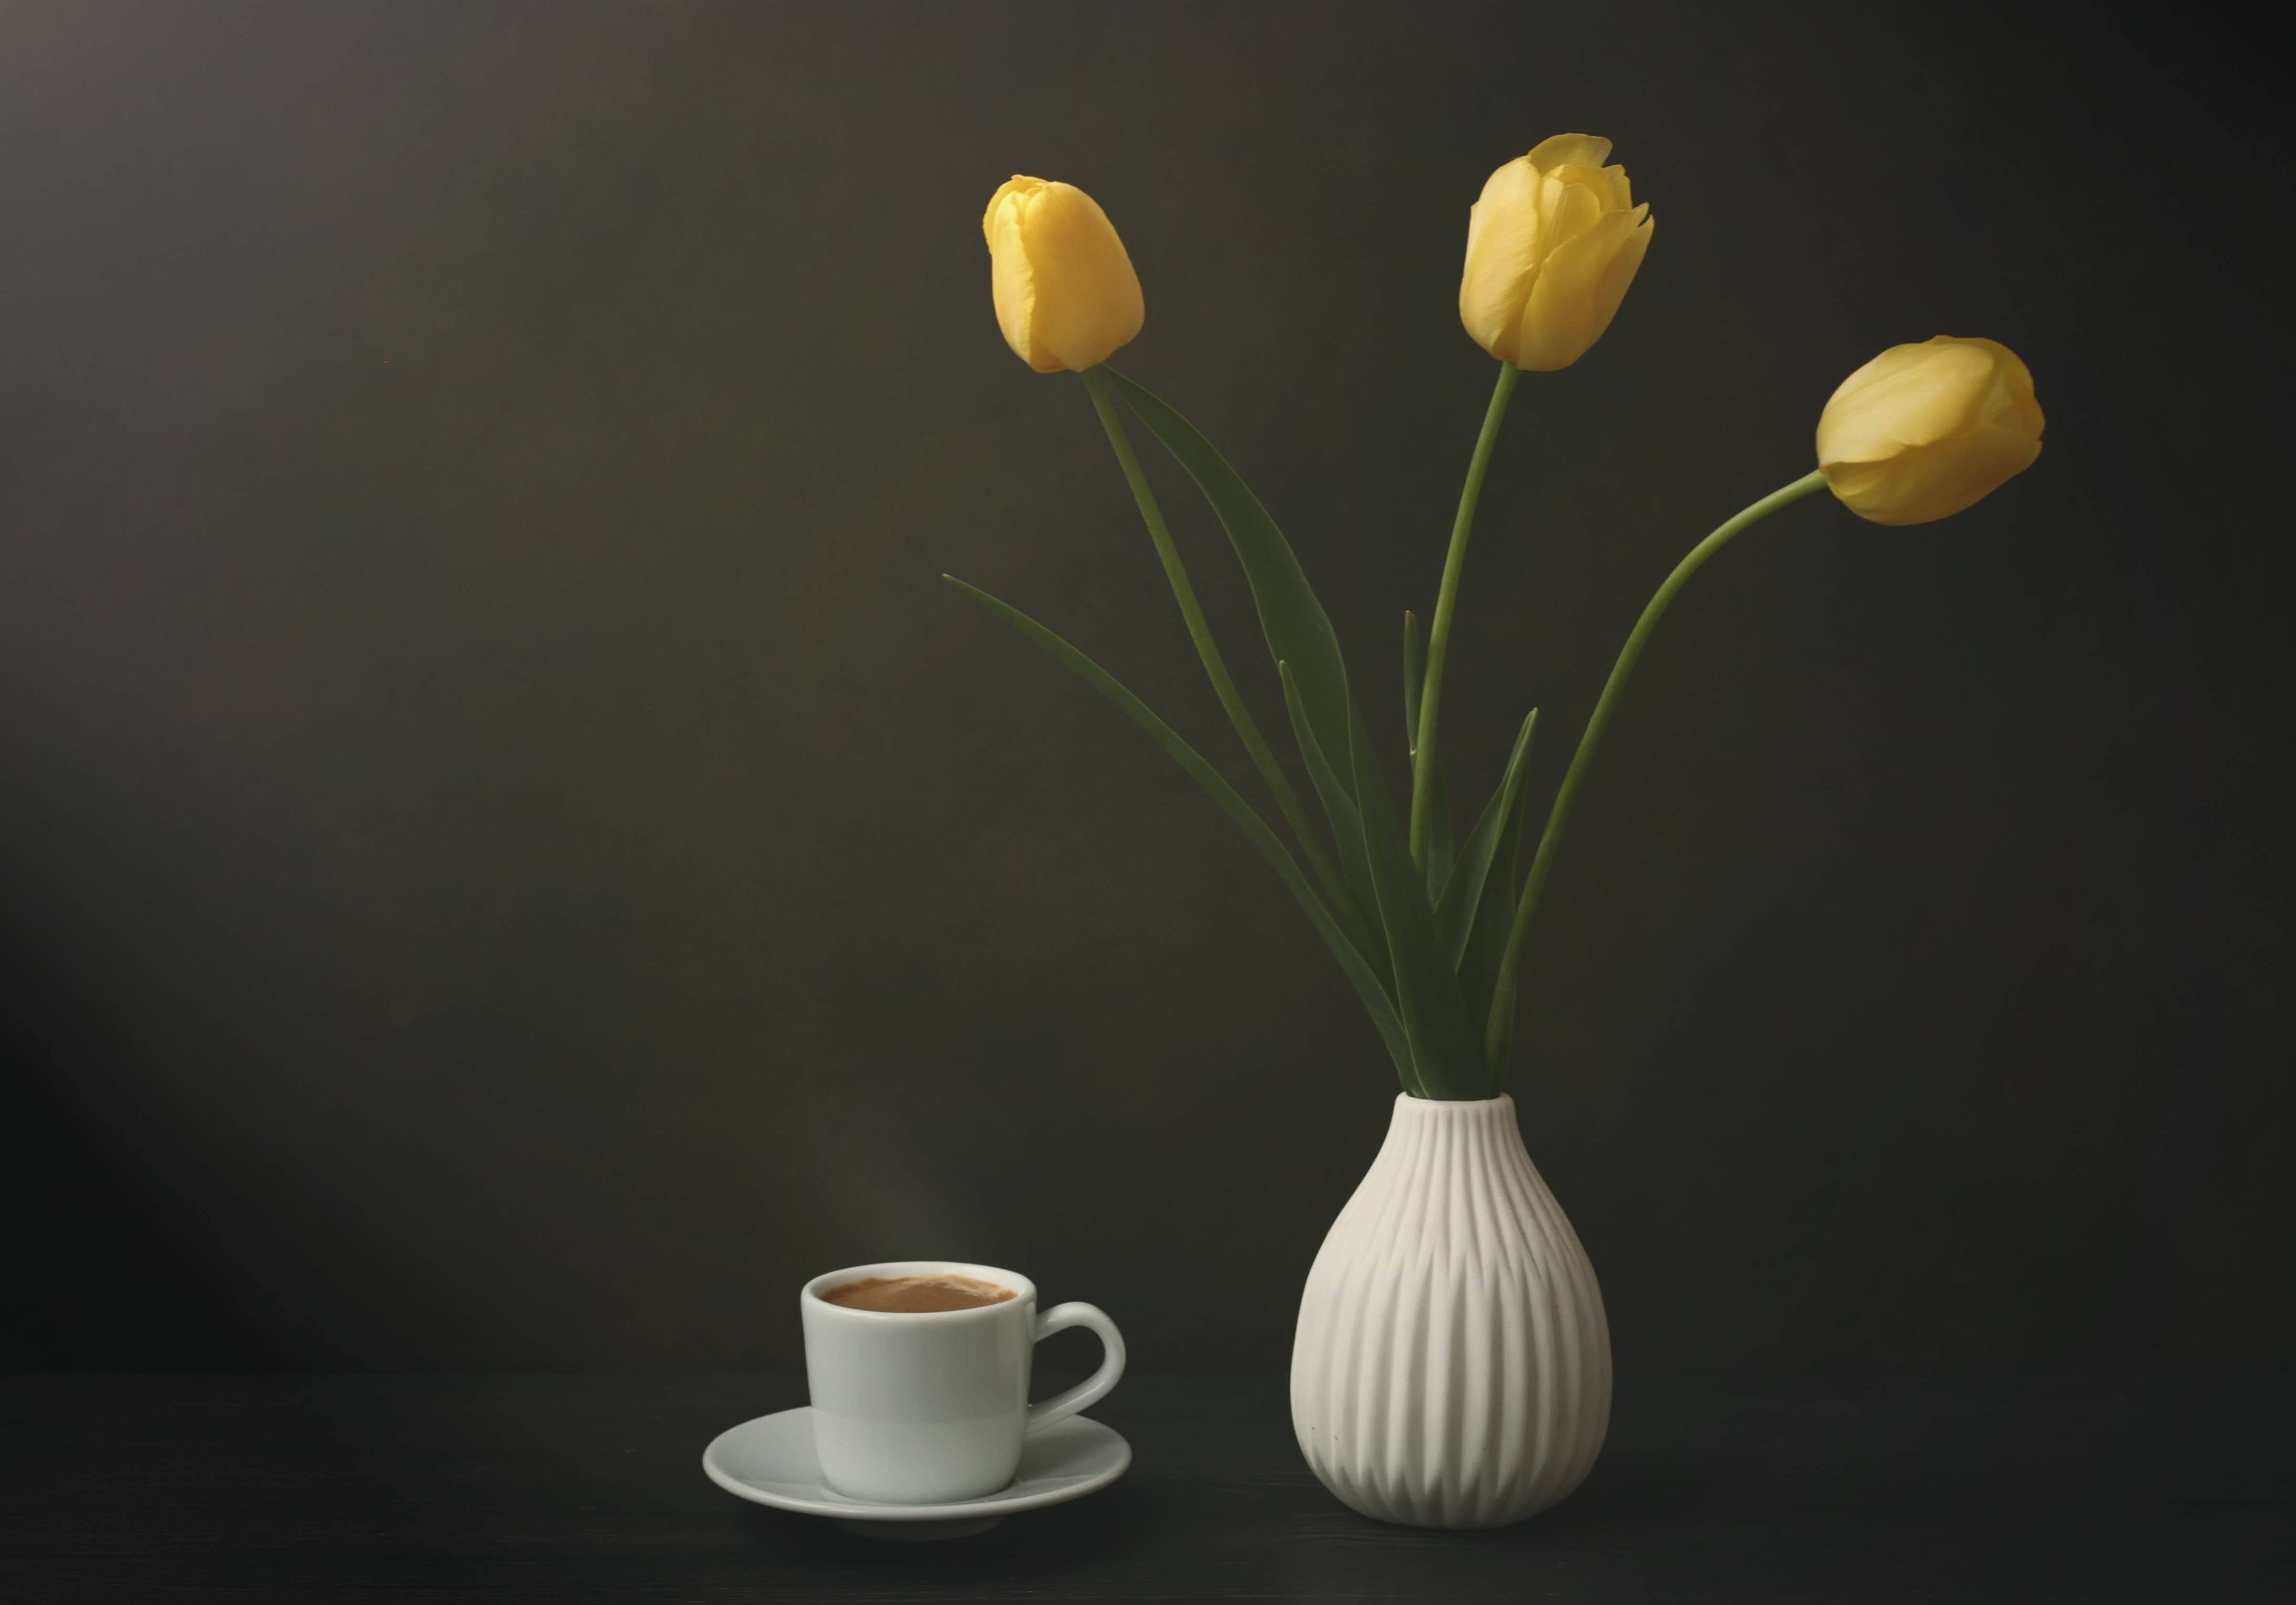 темный фон, чашка, ваза, натюрморт, тюльпан, чай,dark background, cup, still life, flowers, кофе, желтые тюльпаны, Стасов Виталий